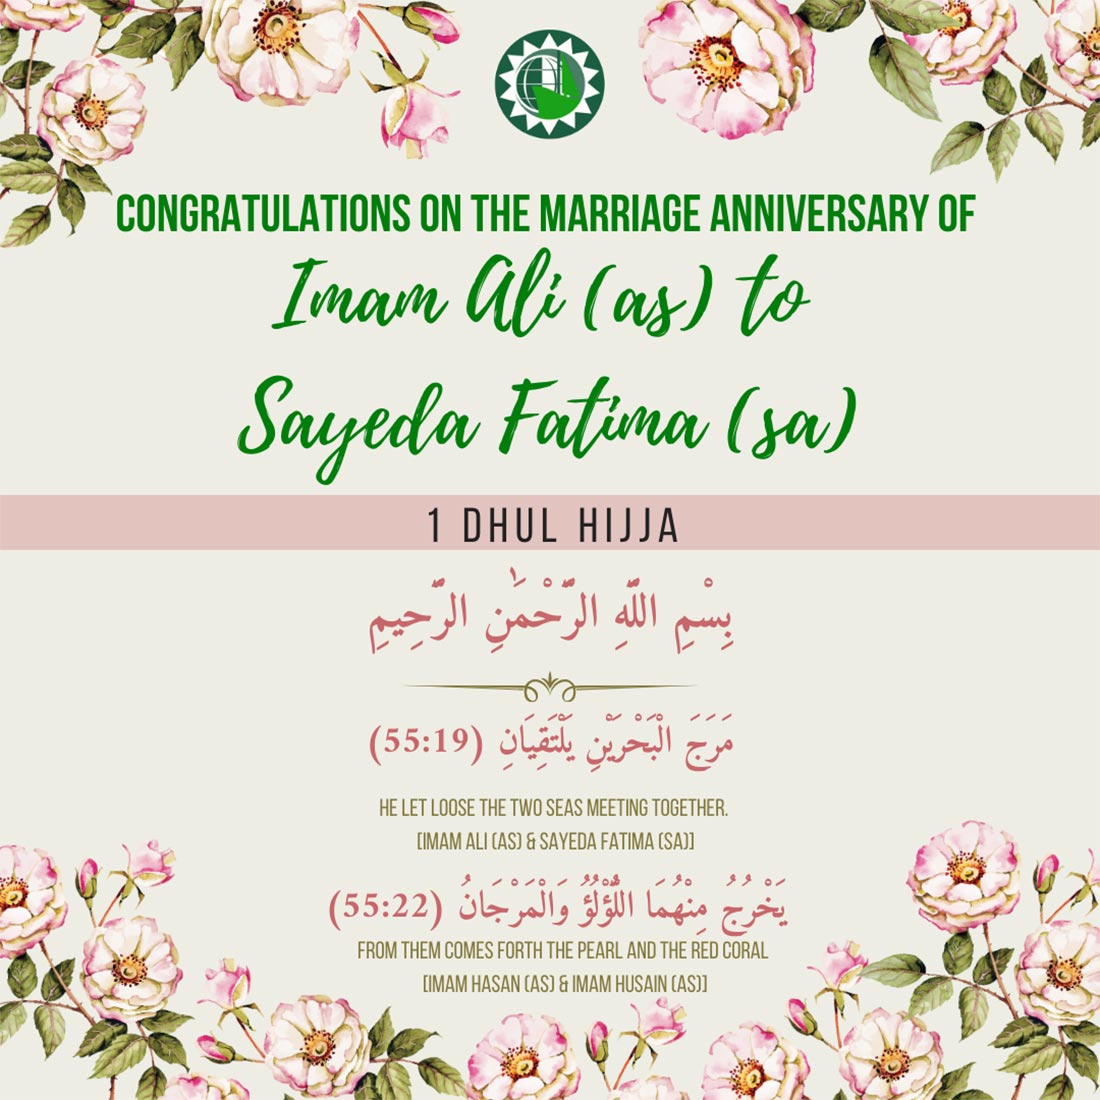 ❤ Congratulations on the marriage anniversary of Imam Ali (as) to Sayeda Fatima (sa) ❤